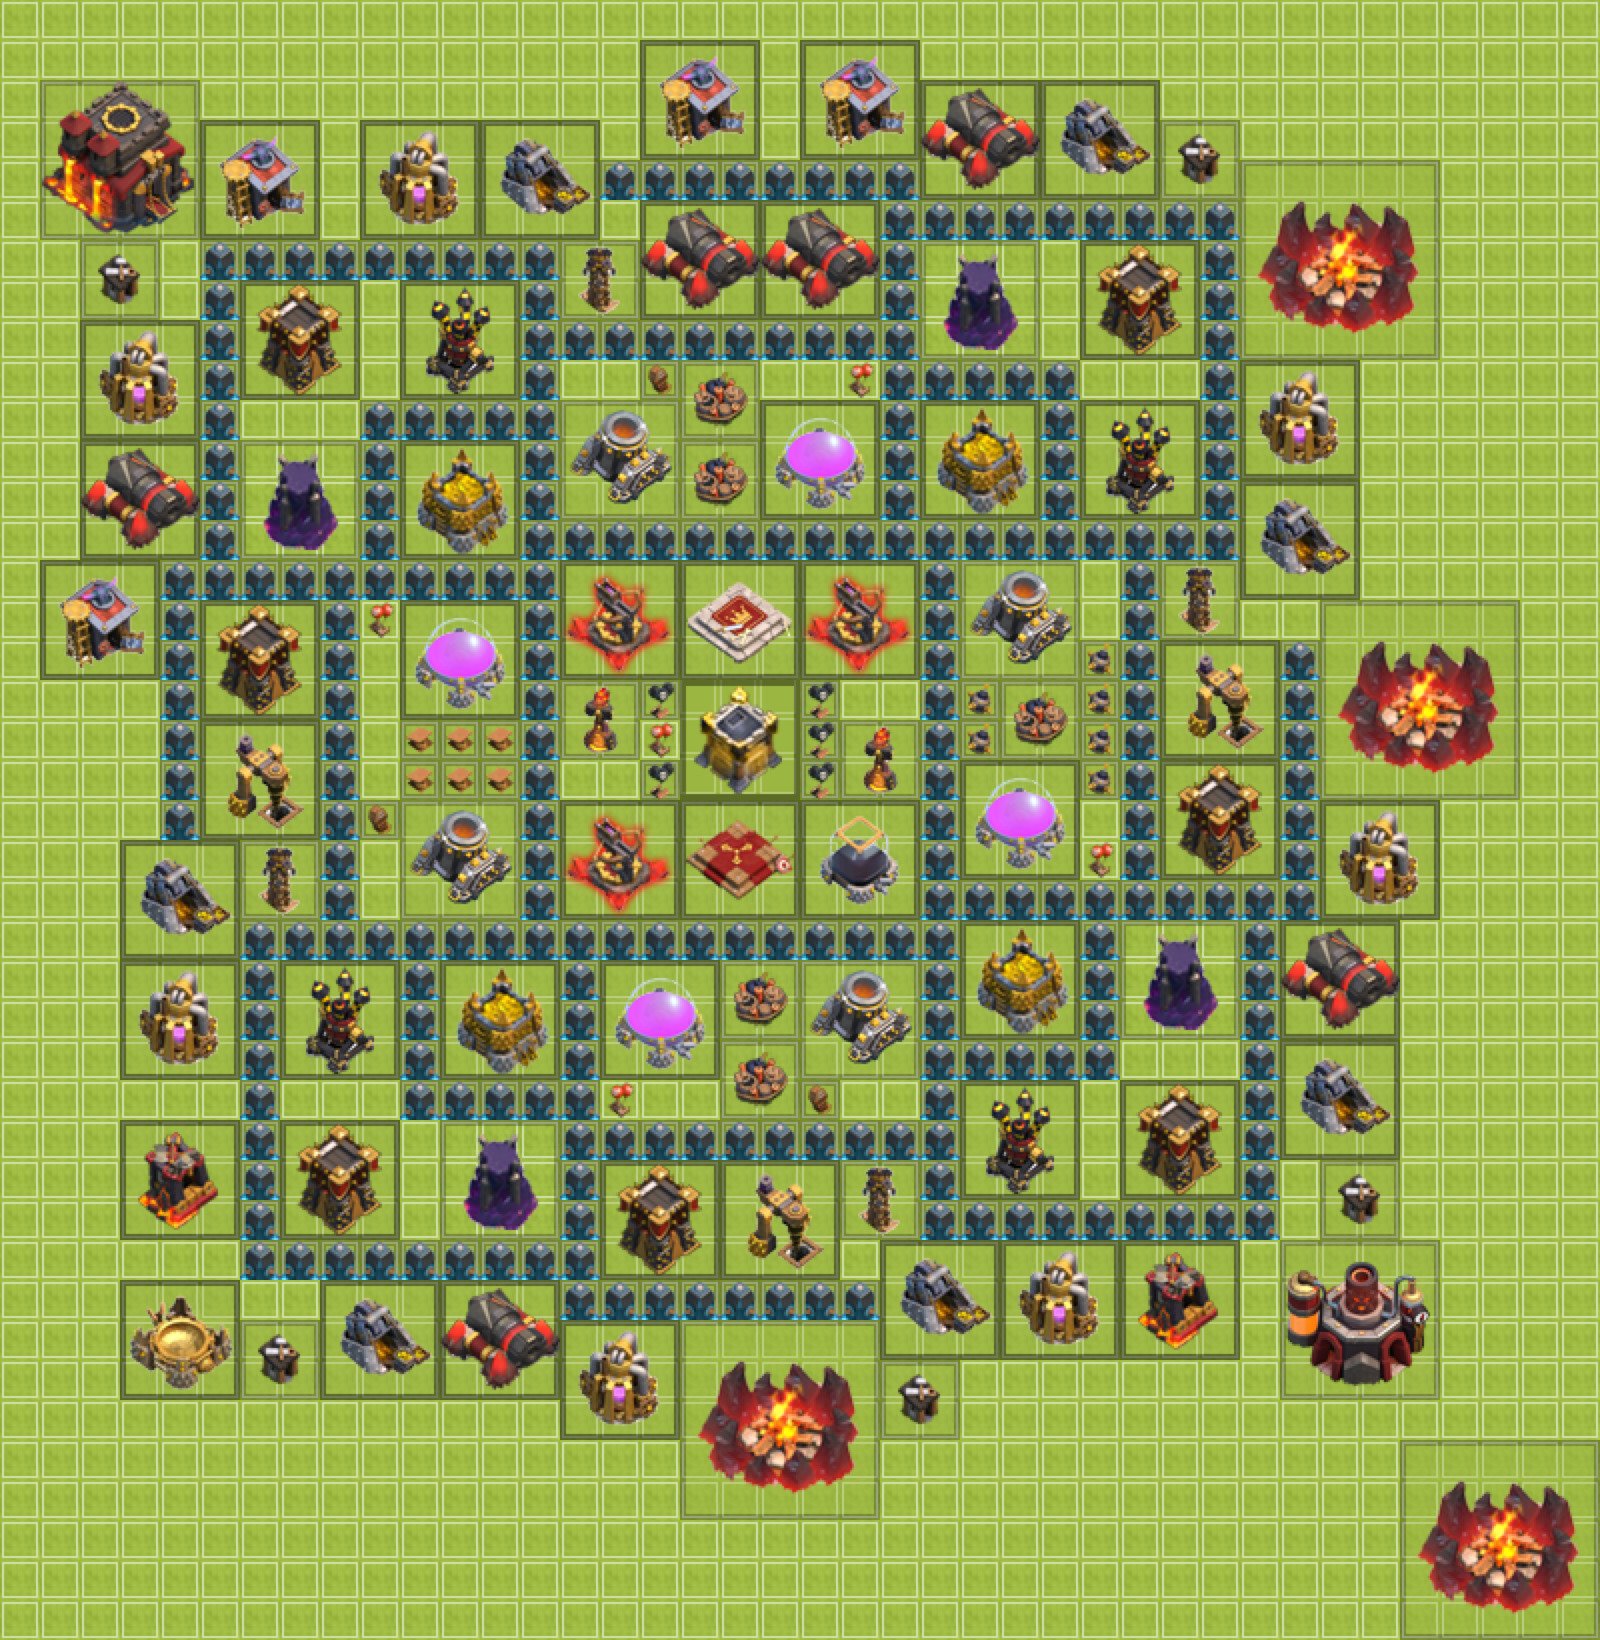 Farming Base TH10 - plan / layout / design - Clash of Clans, #19.